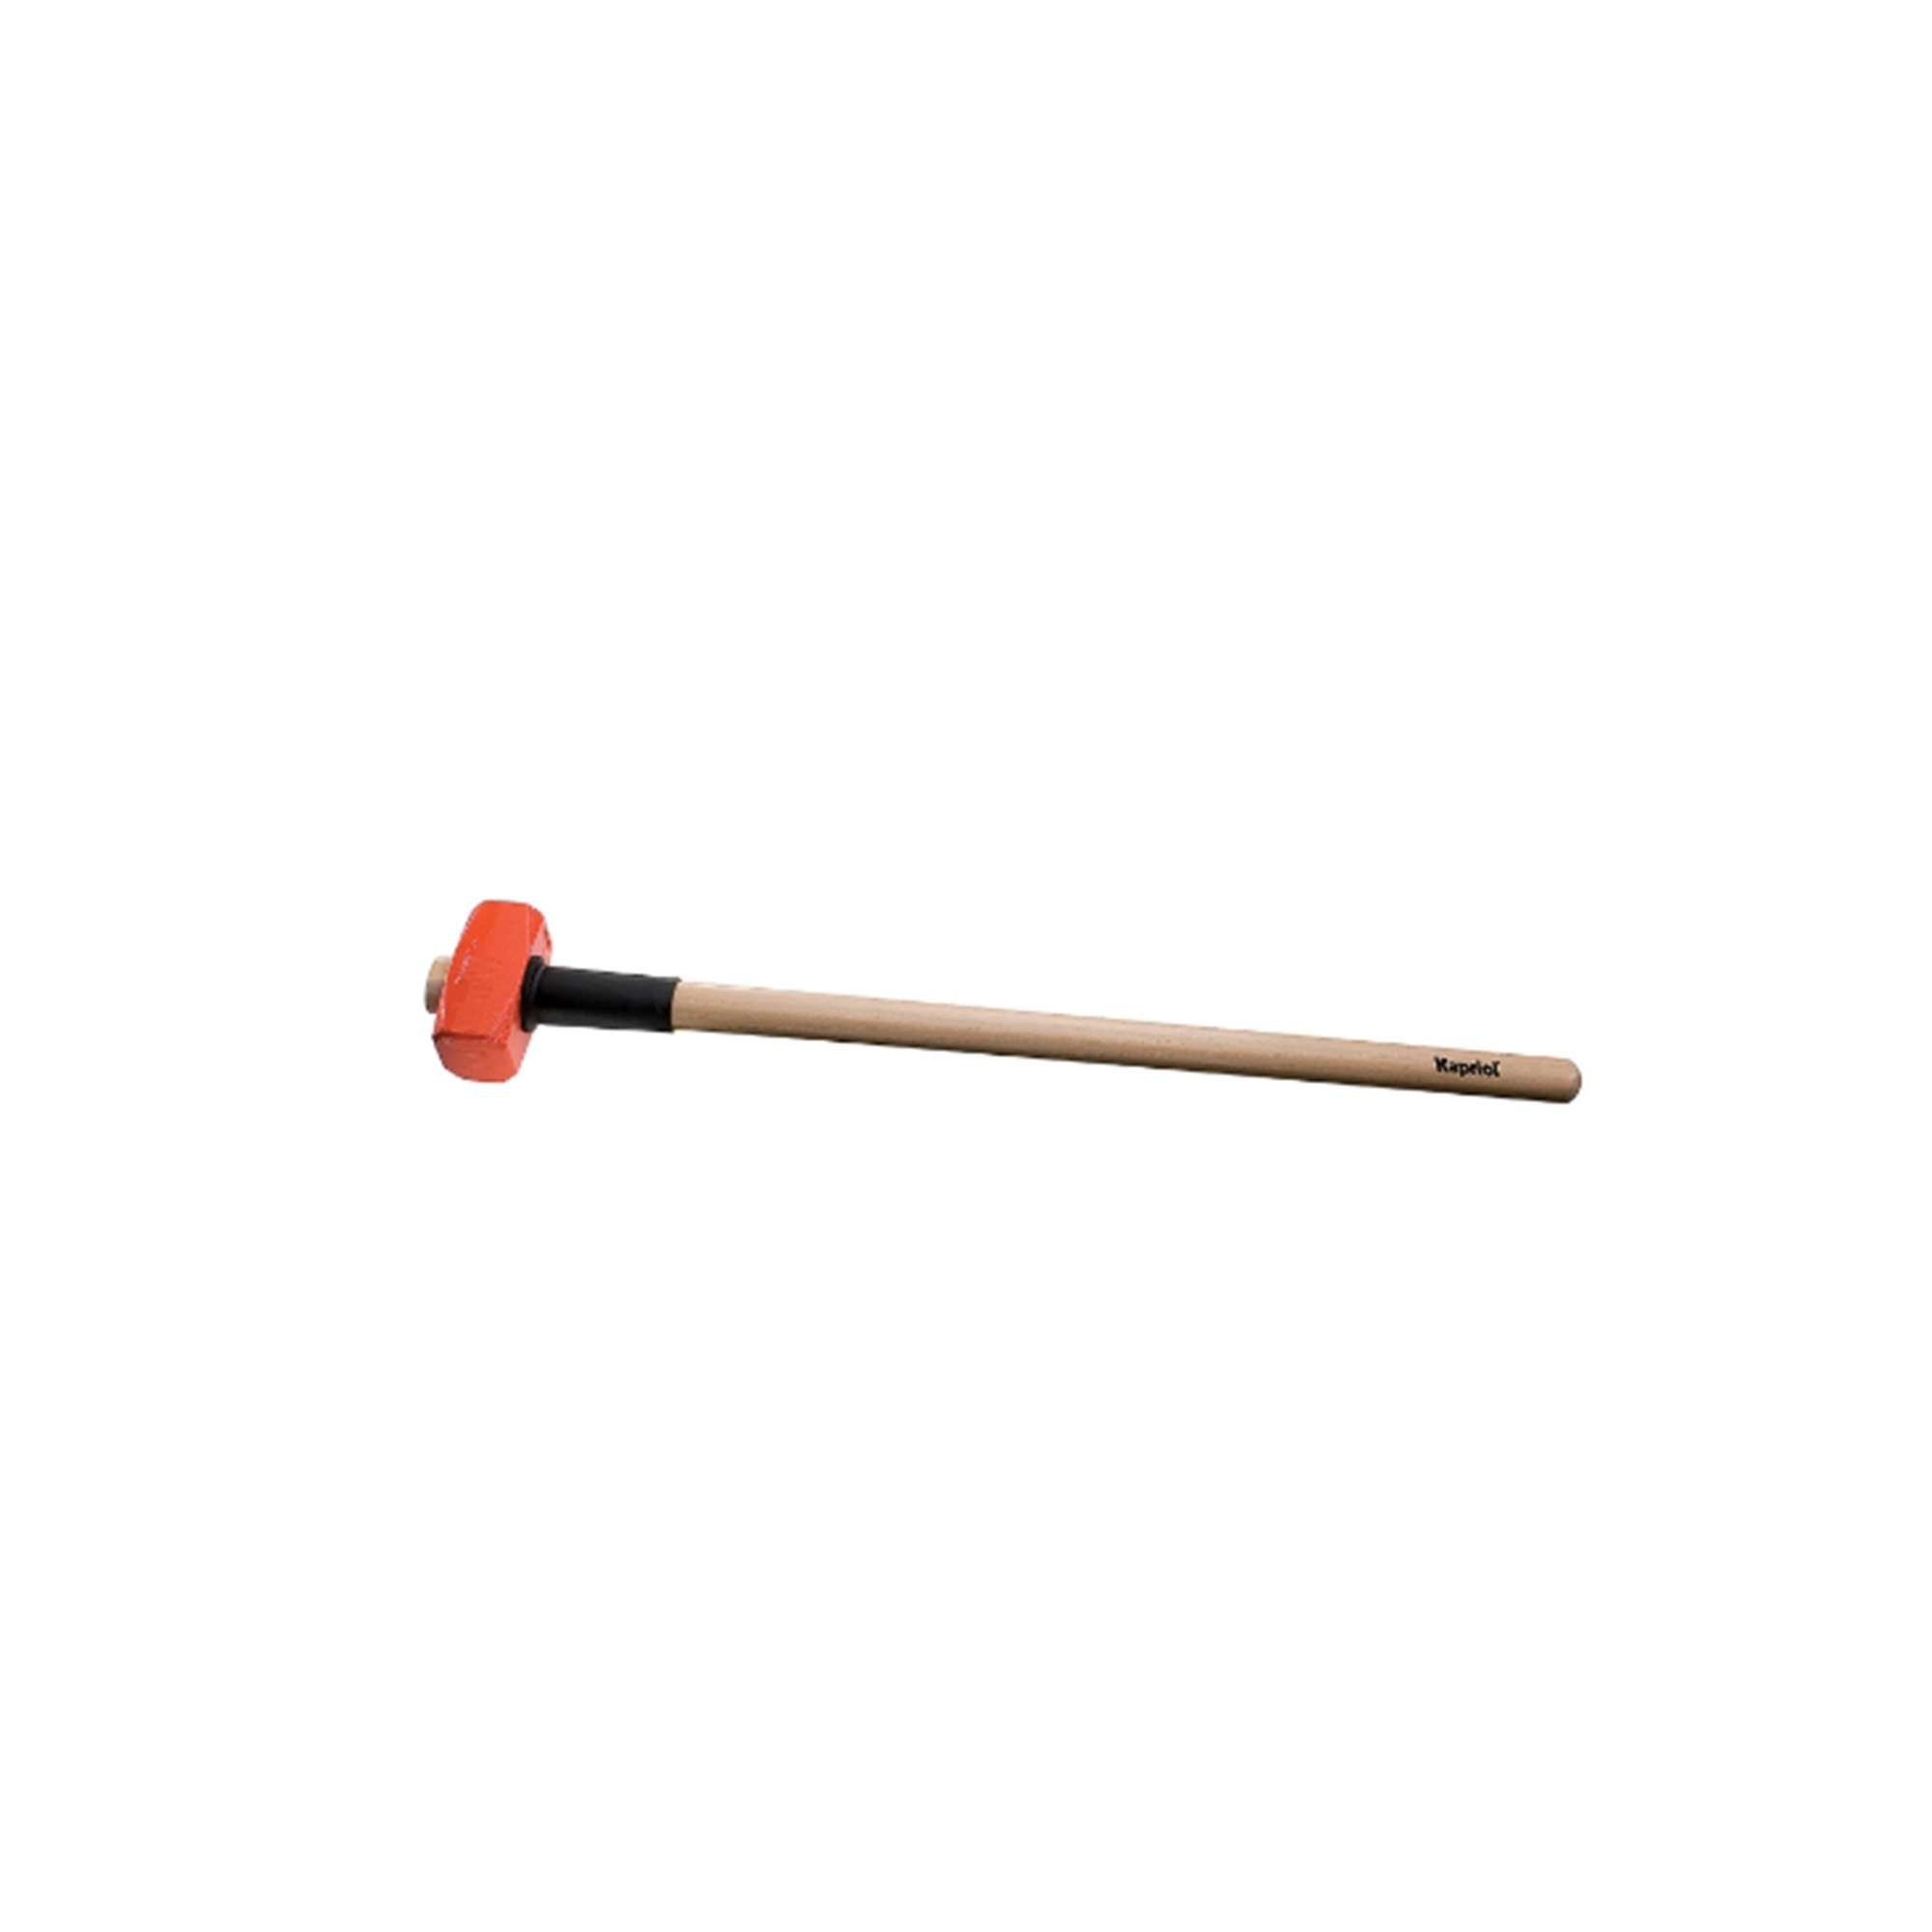 Sledge hammer with handle - 12301 - Kapriol